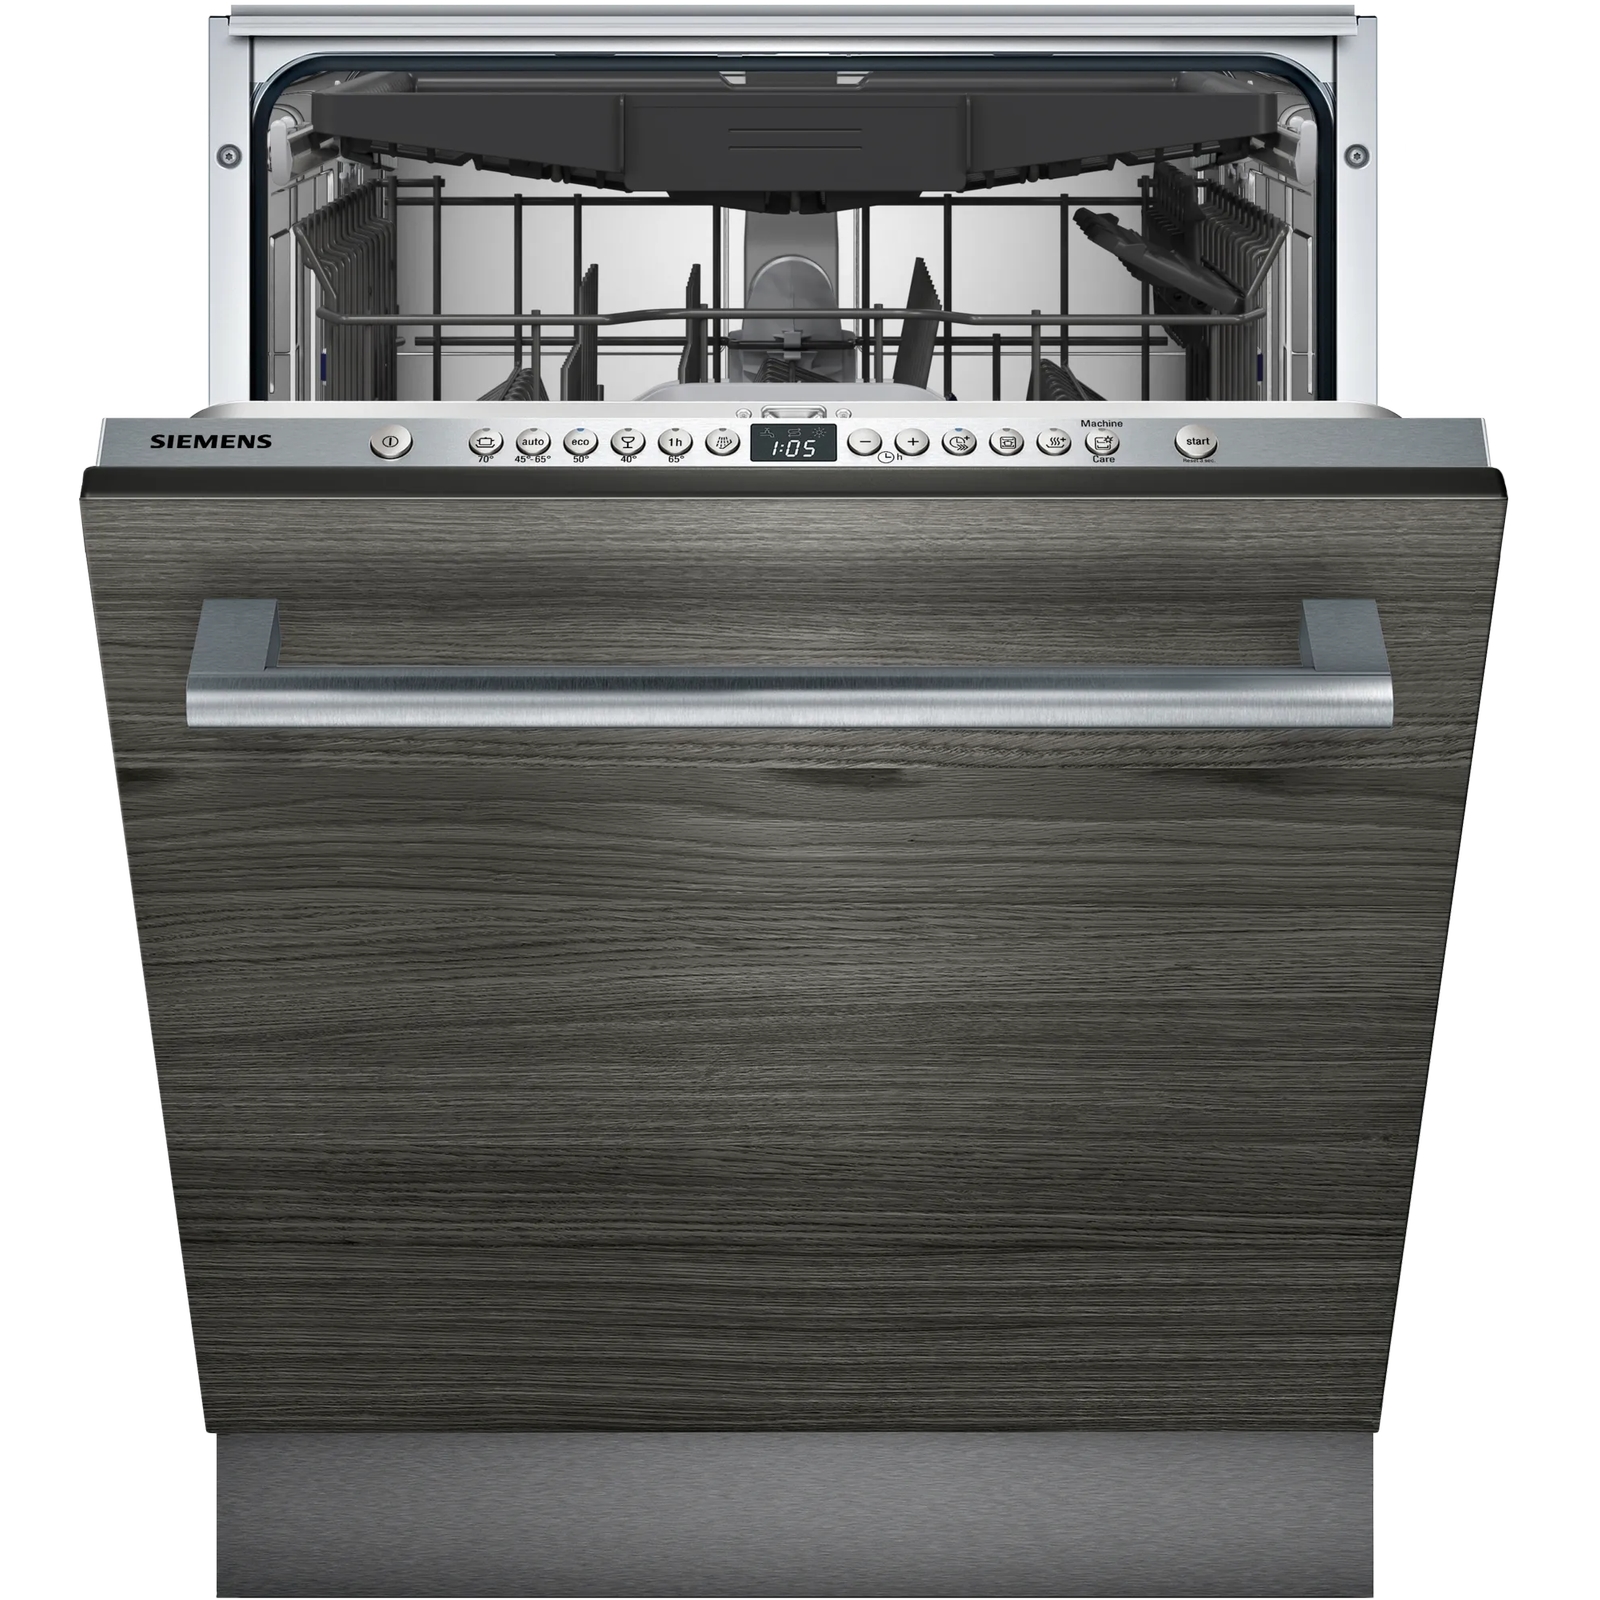 Встраиваемая посудомоечная машина Siemens SN636X06KE встраиваемая посудомоечная машина siemens sn65zx49ce